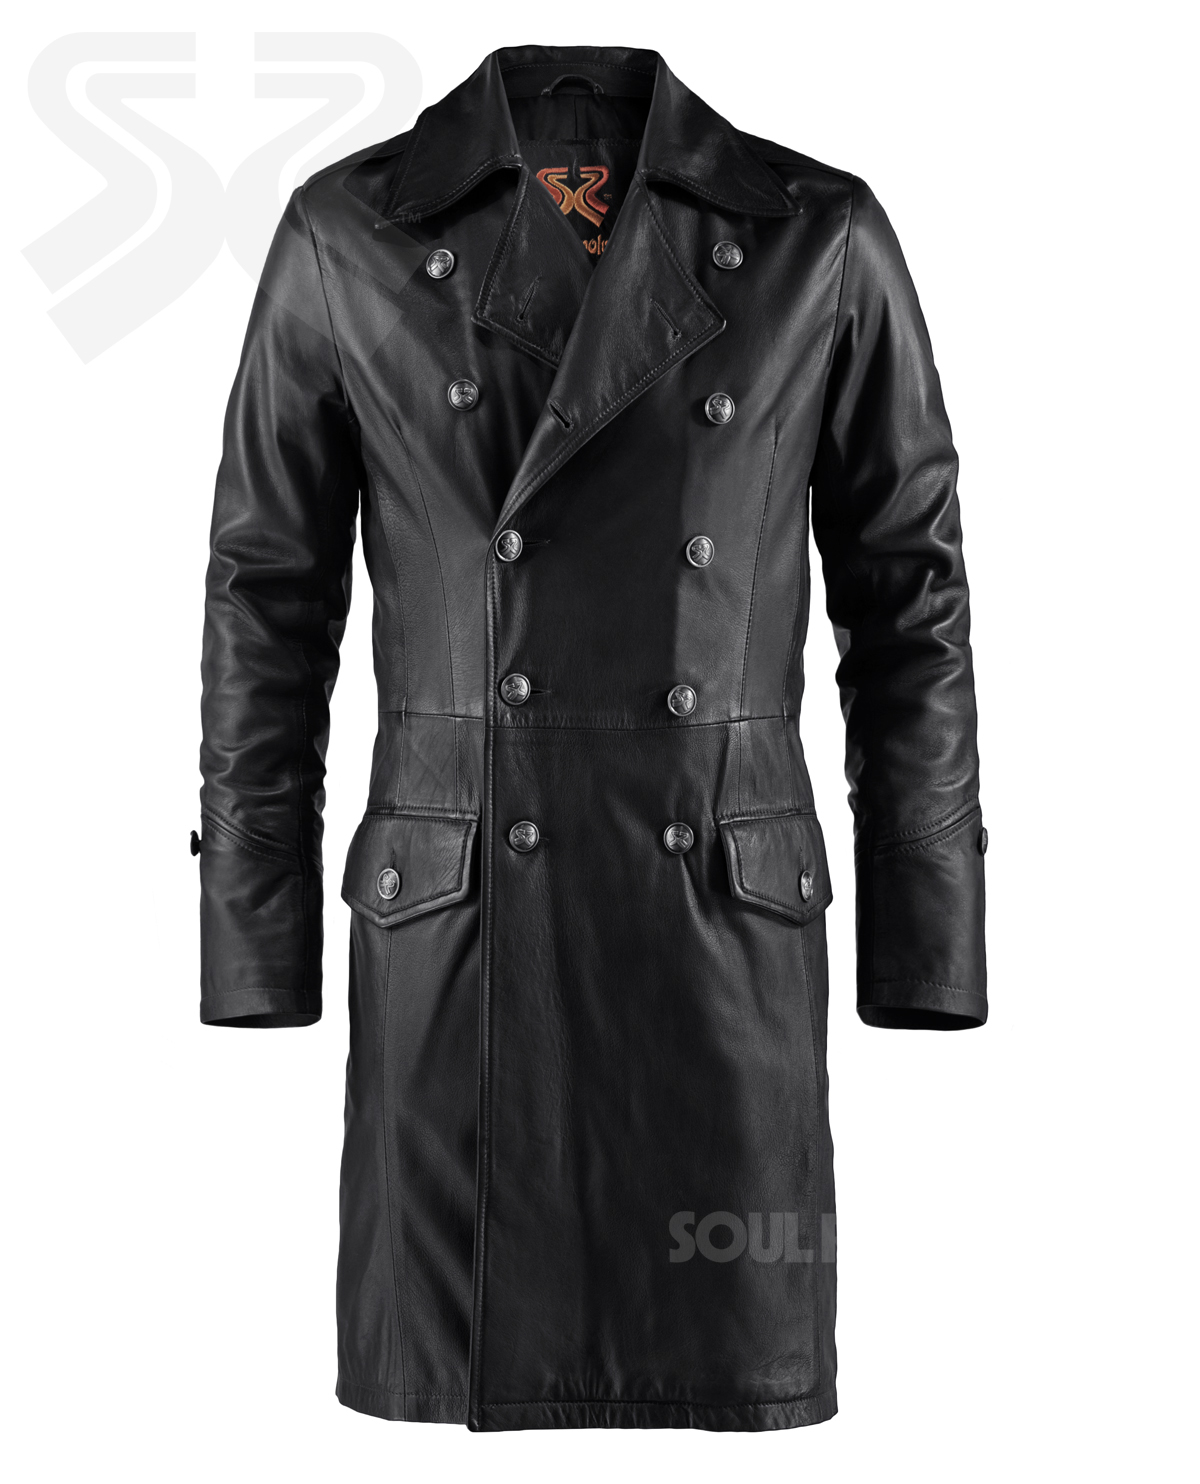 Soul Revolver Leather Jacket - The Butcher | eBay